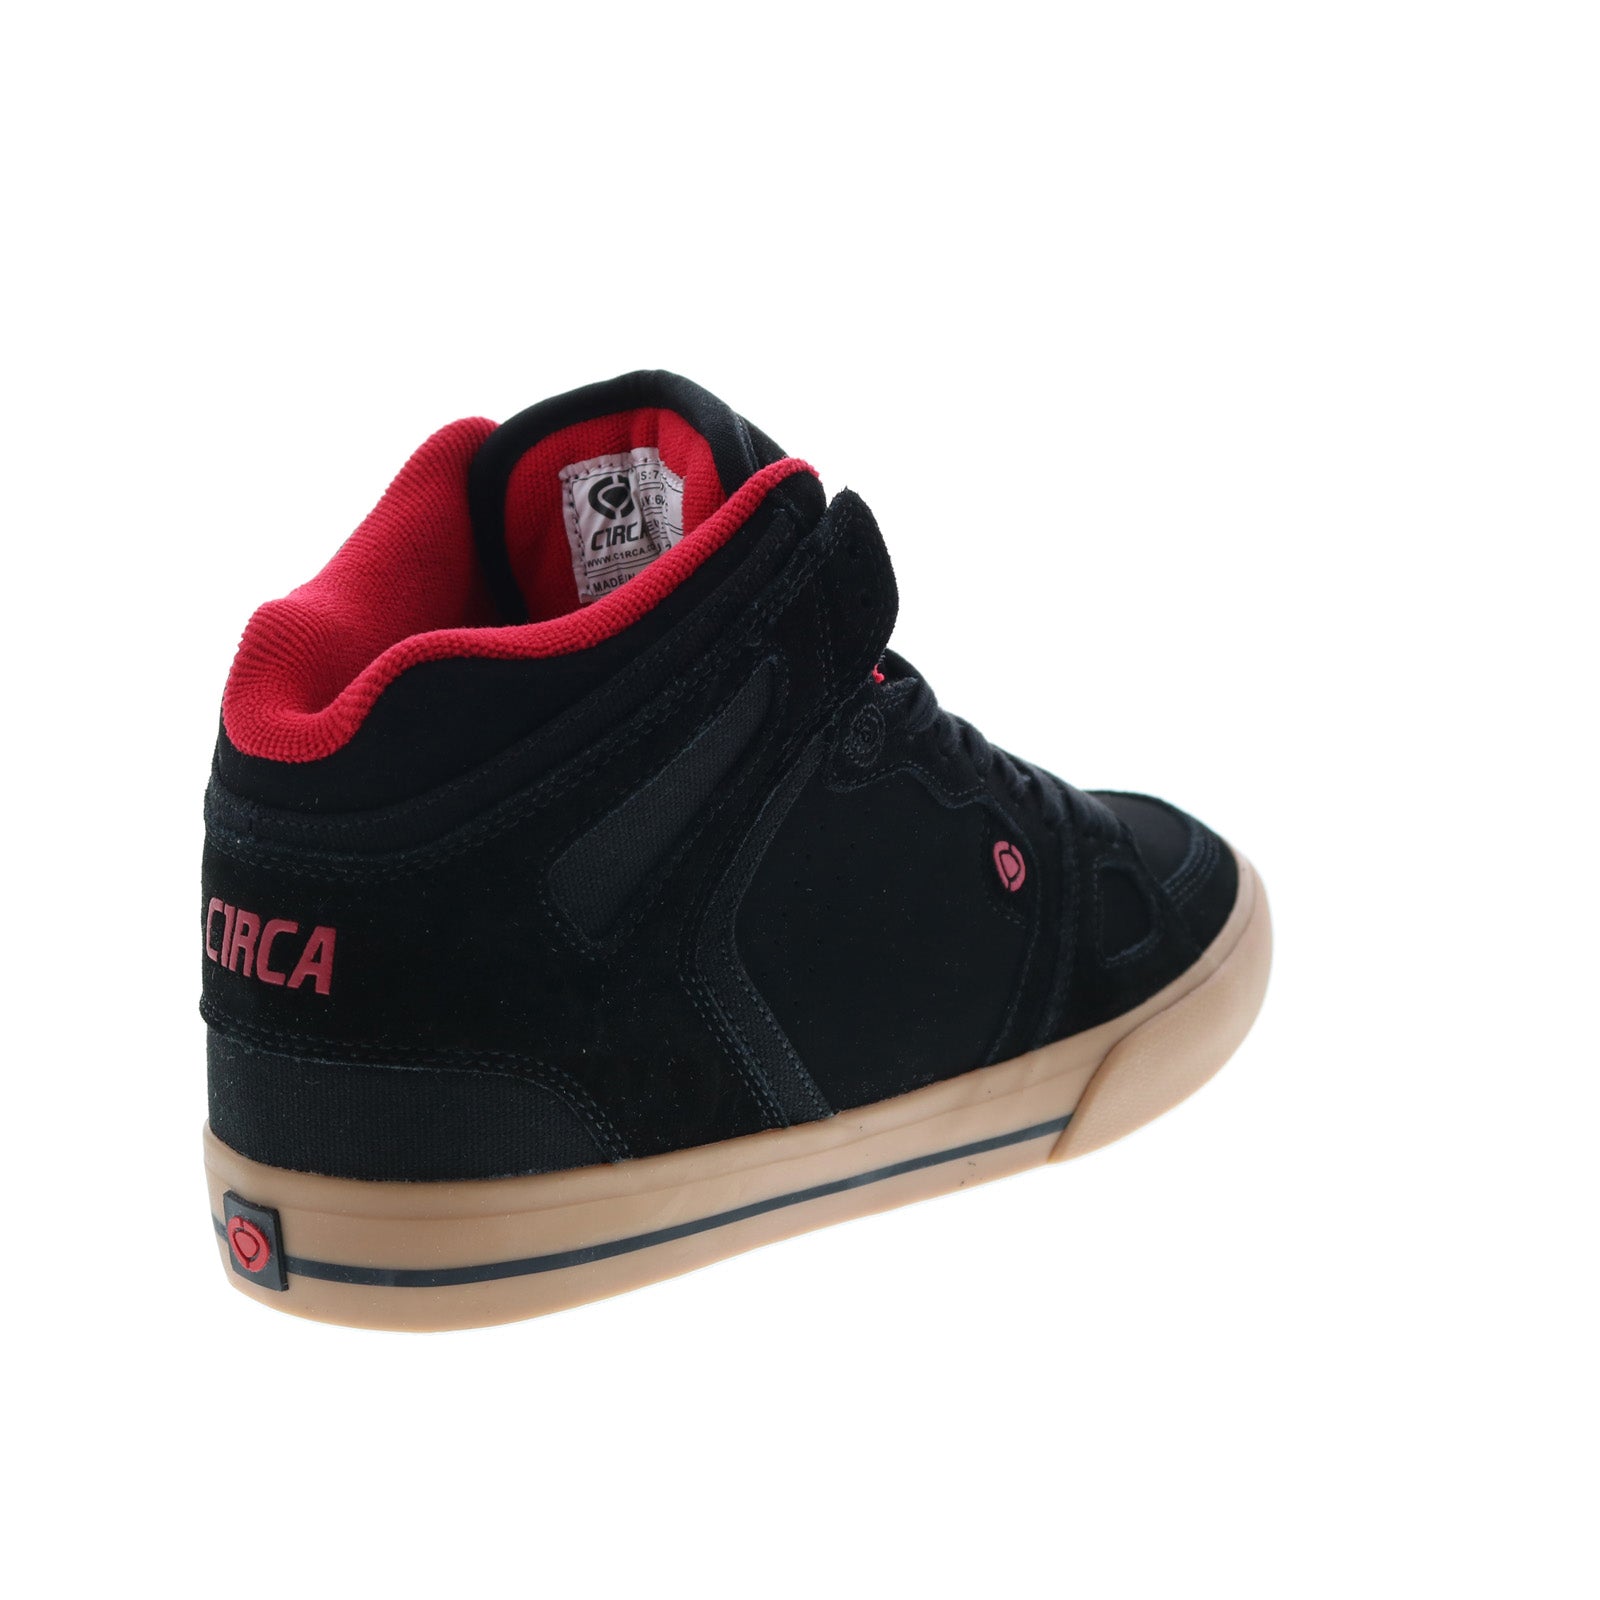 C1rca Circa 99 VULC 8113 119 Mens Black Nubuck Skate Sneakers Shoes - Ruze  Shoes